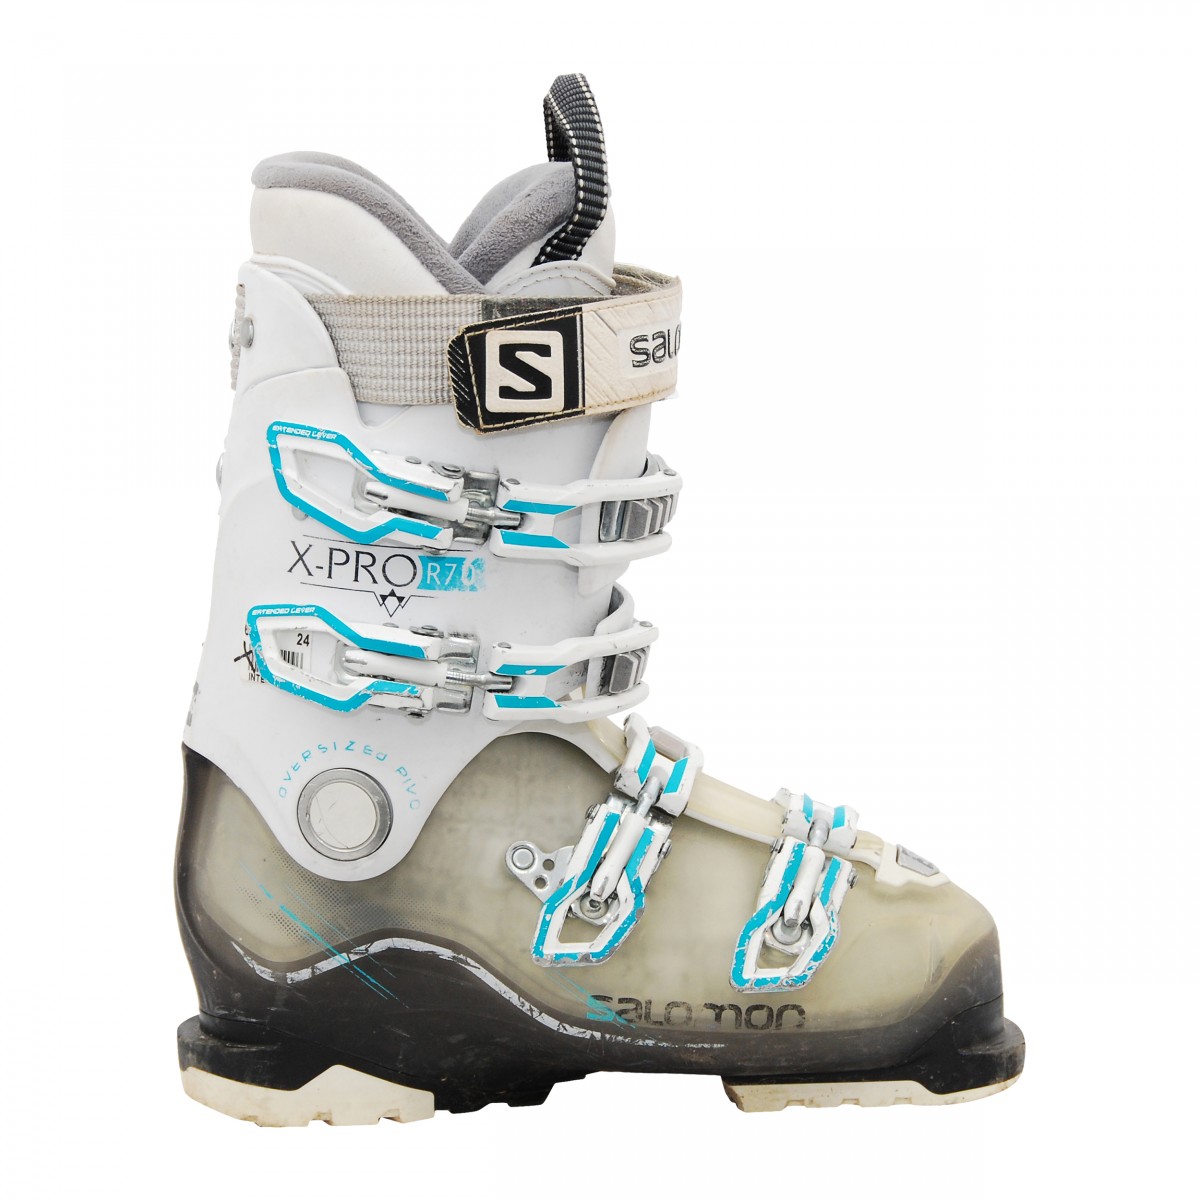 rapport Kategori Defekt Used ski boot Salomon Xpro r70w white black blue